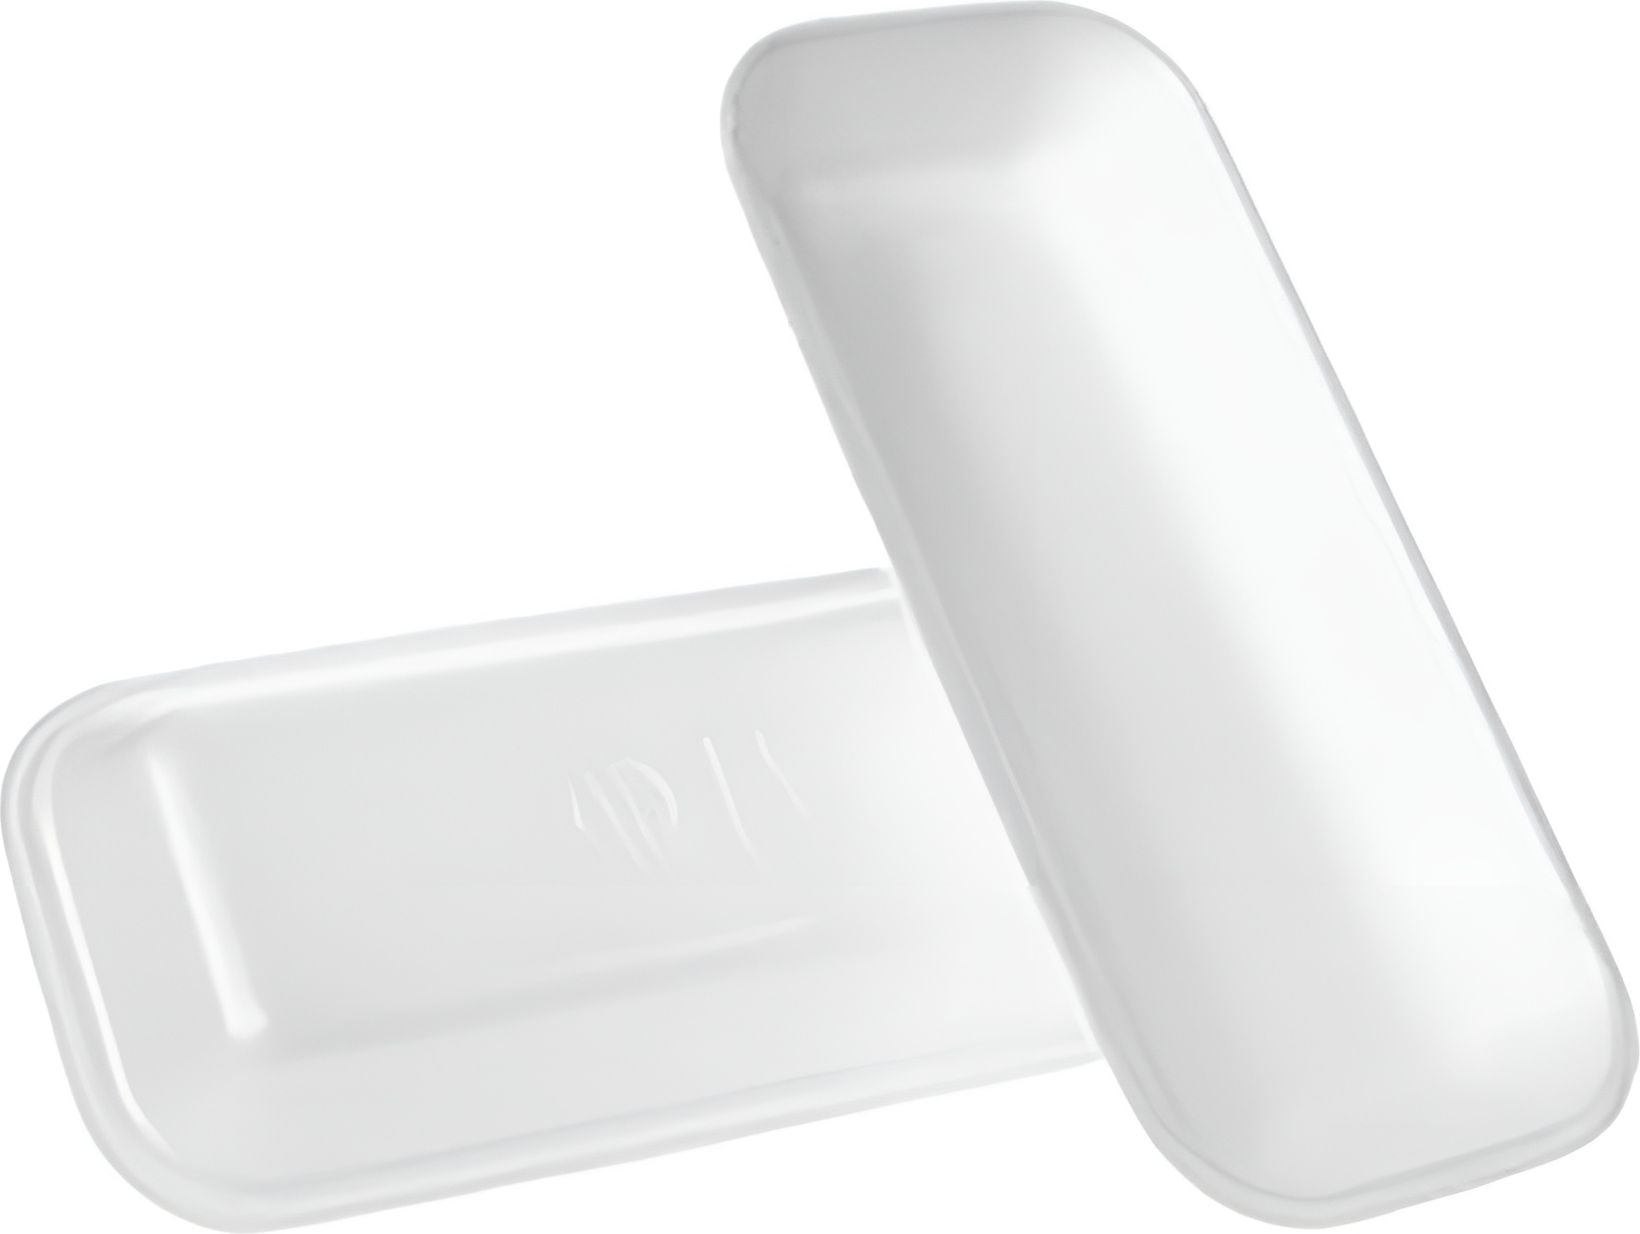 Dyne-A-Pak Inc. - 10.75" x 5.88" x 0.69" 10S White Foam Meat Trays, 500 Per Case - 201010SW00